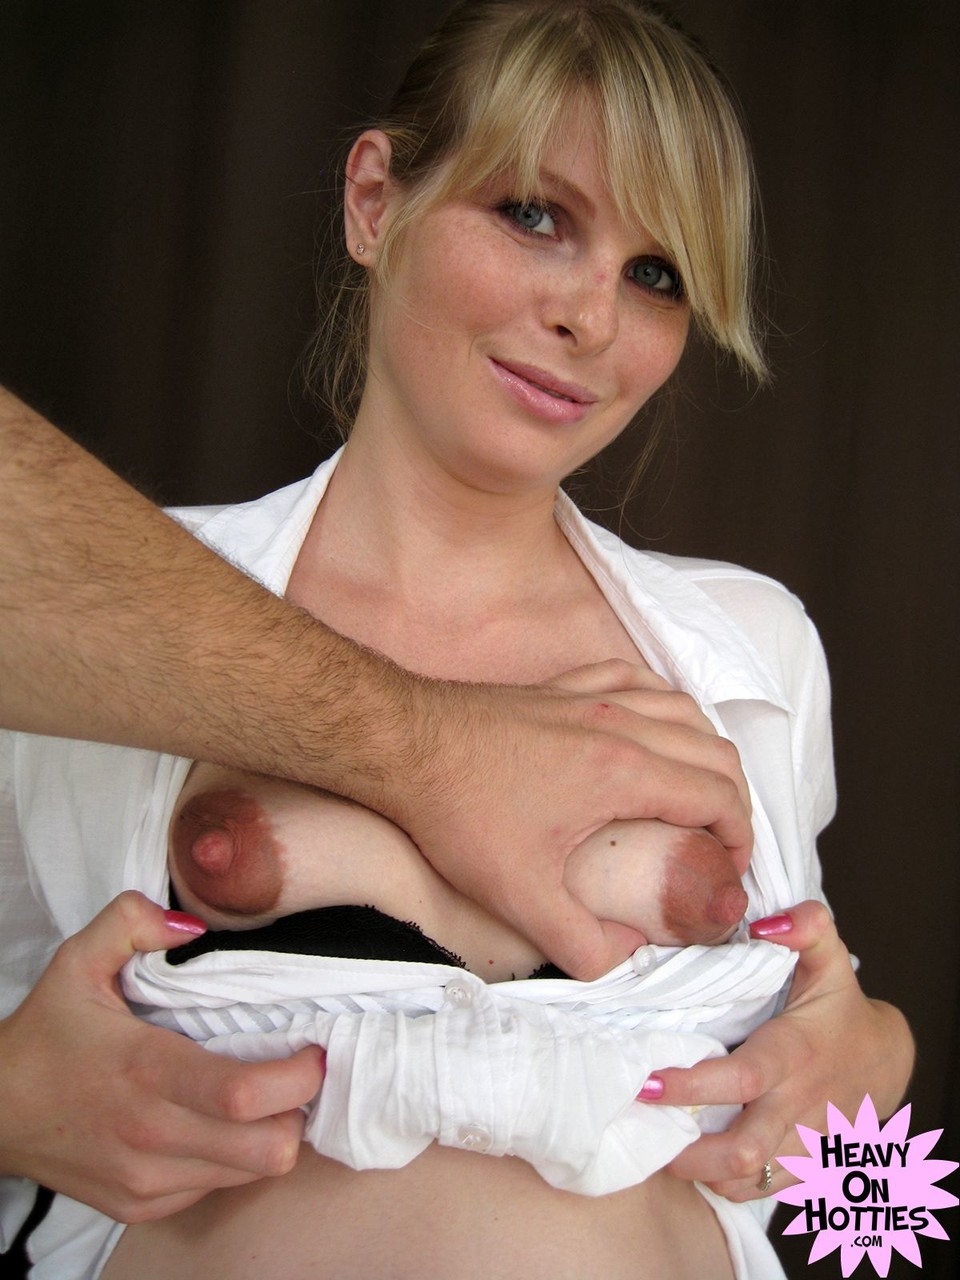 Pregnant amateur Wiska gets jizz on her face during a POV blowjob porn photo #424010546 | Heavy On Hotties Pics, Wiska, Pregnant, mobile porn